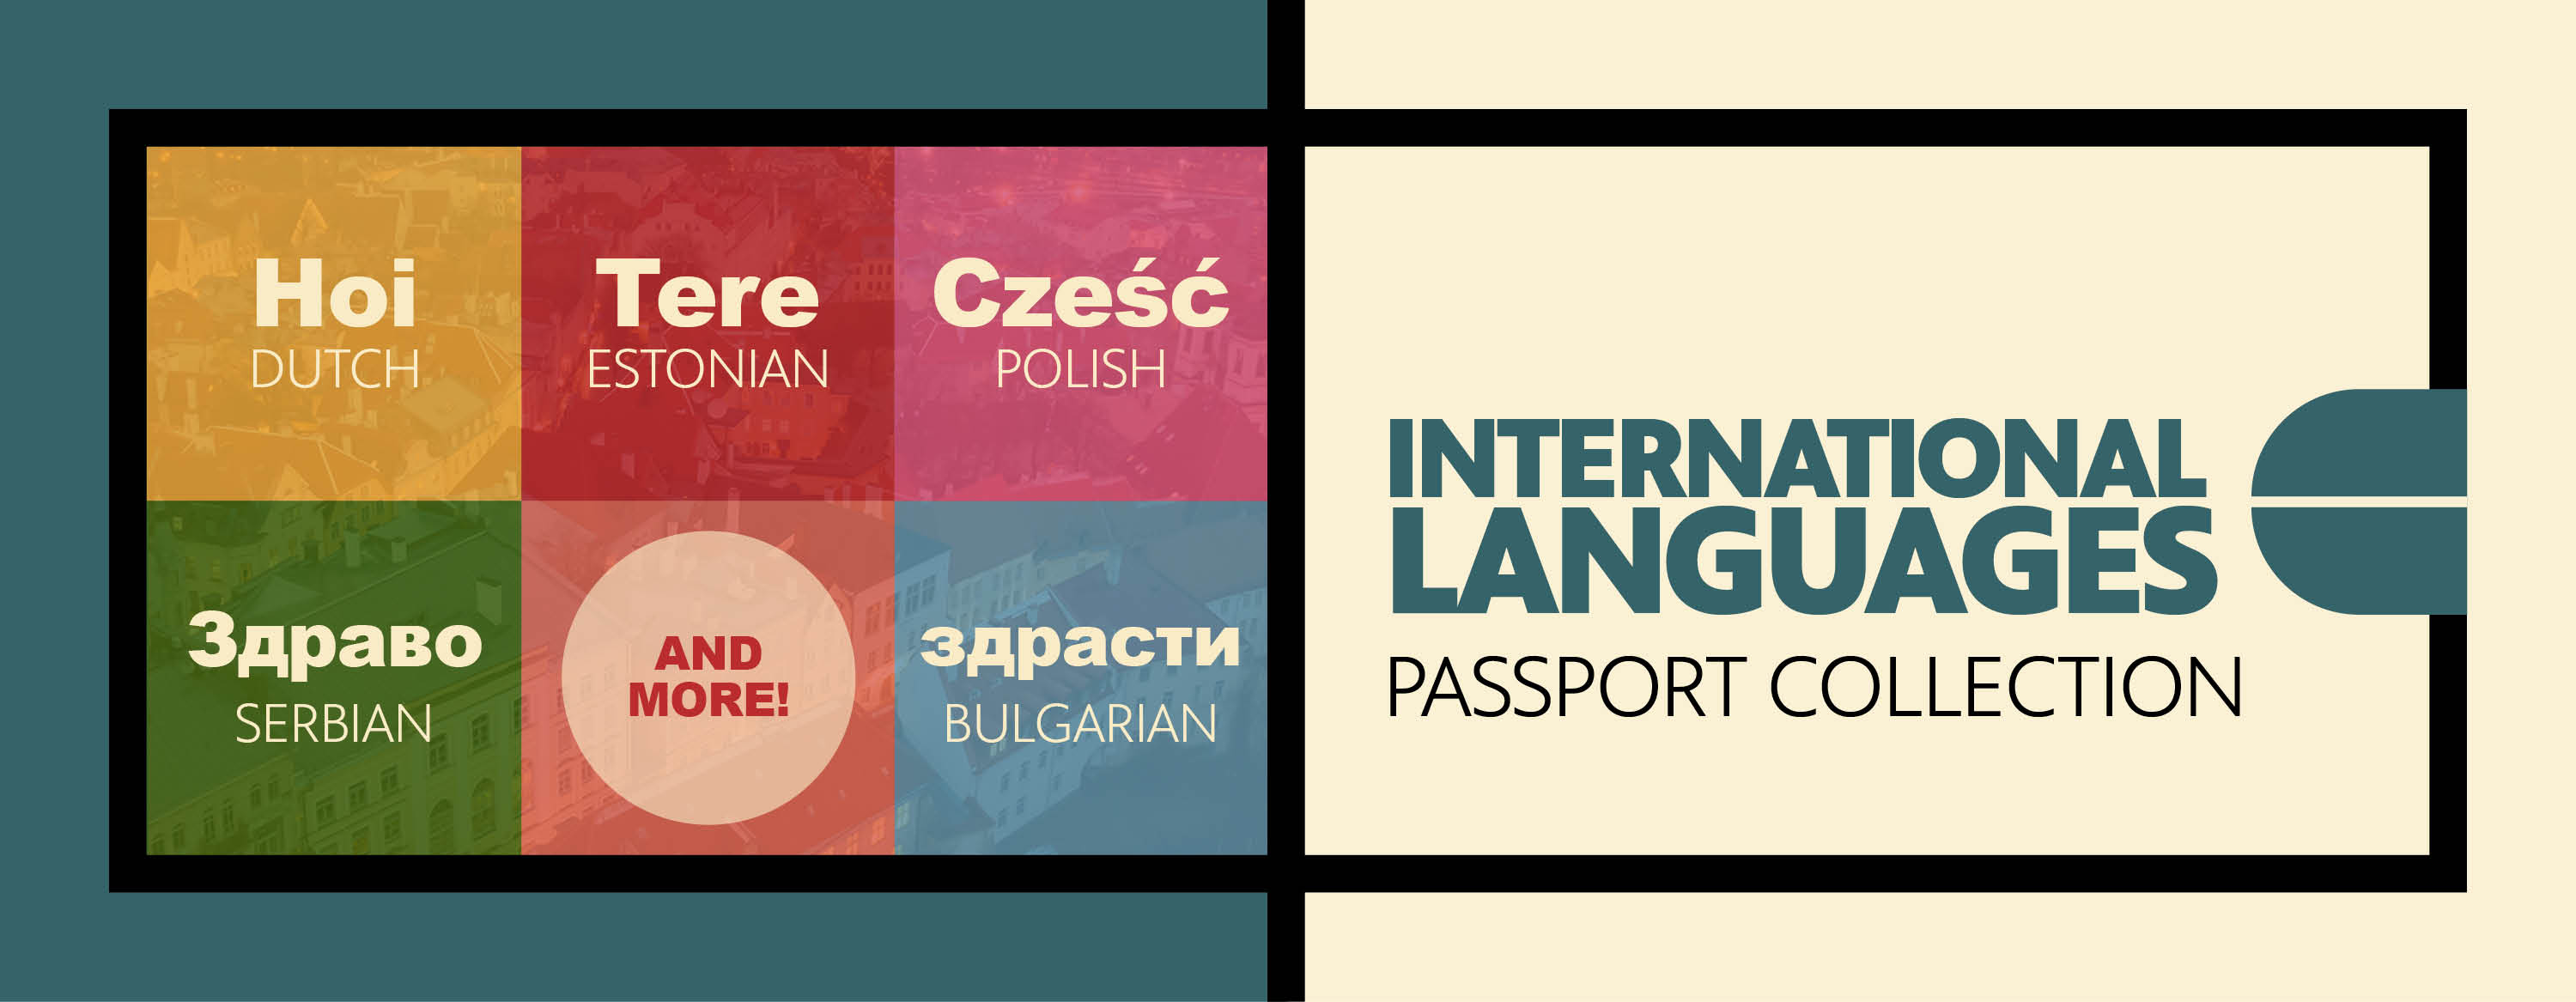 passport to languages portland